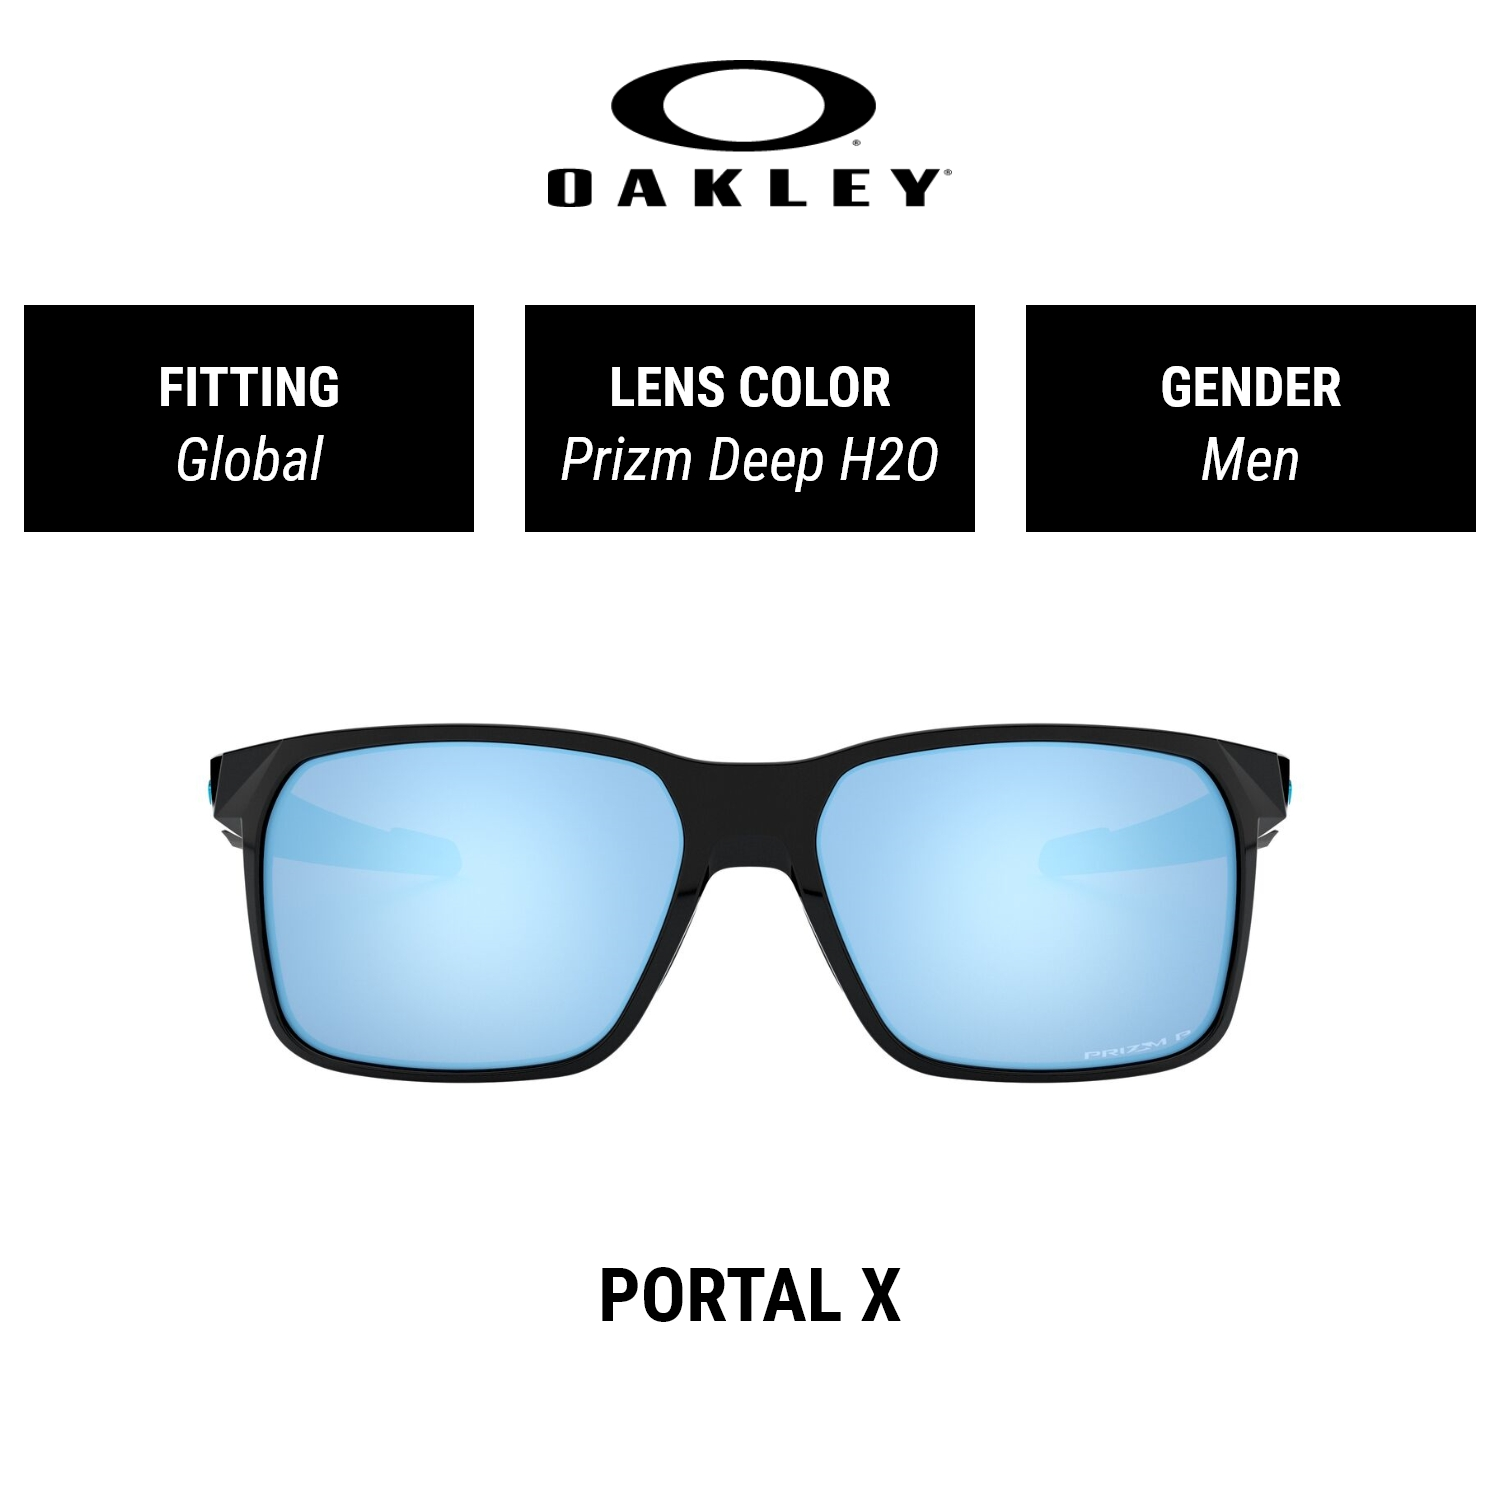 OAKLEY PORTAL X OO9460 946004 Men Global Fitting Polarized PRIZM Sunglasses  Size 59mm | Lazada Singapore